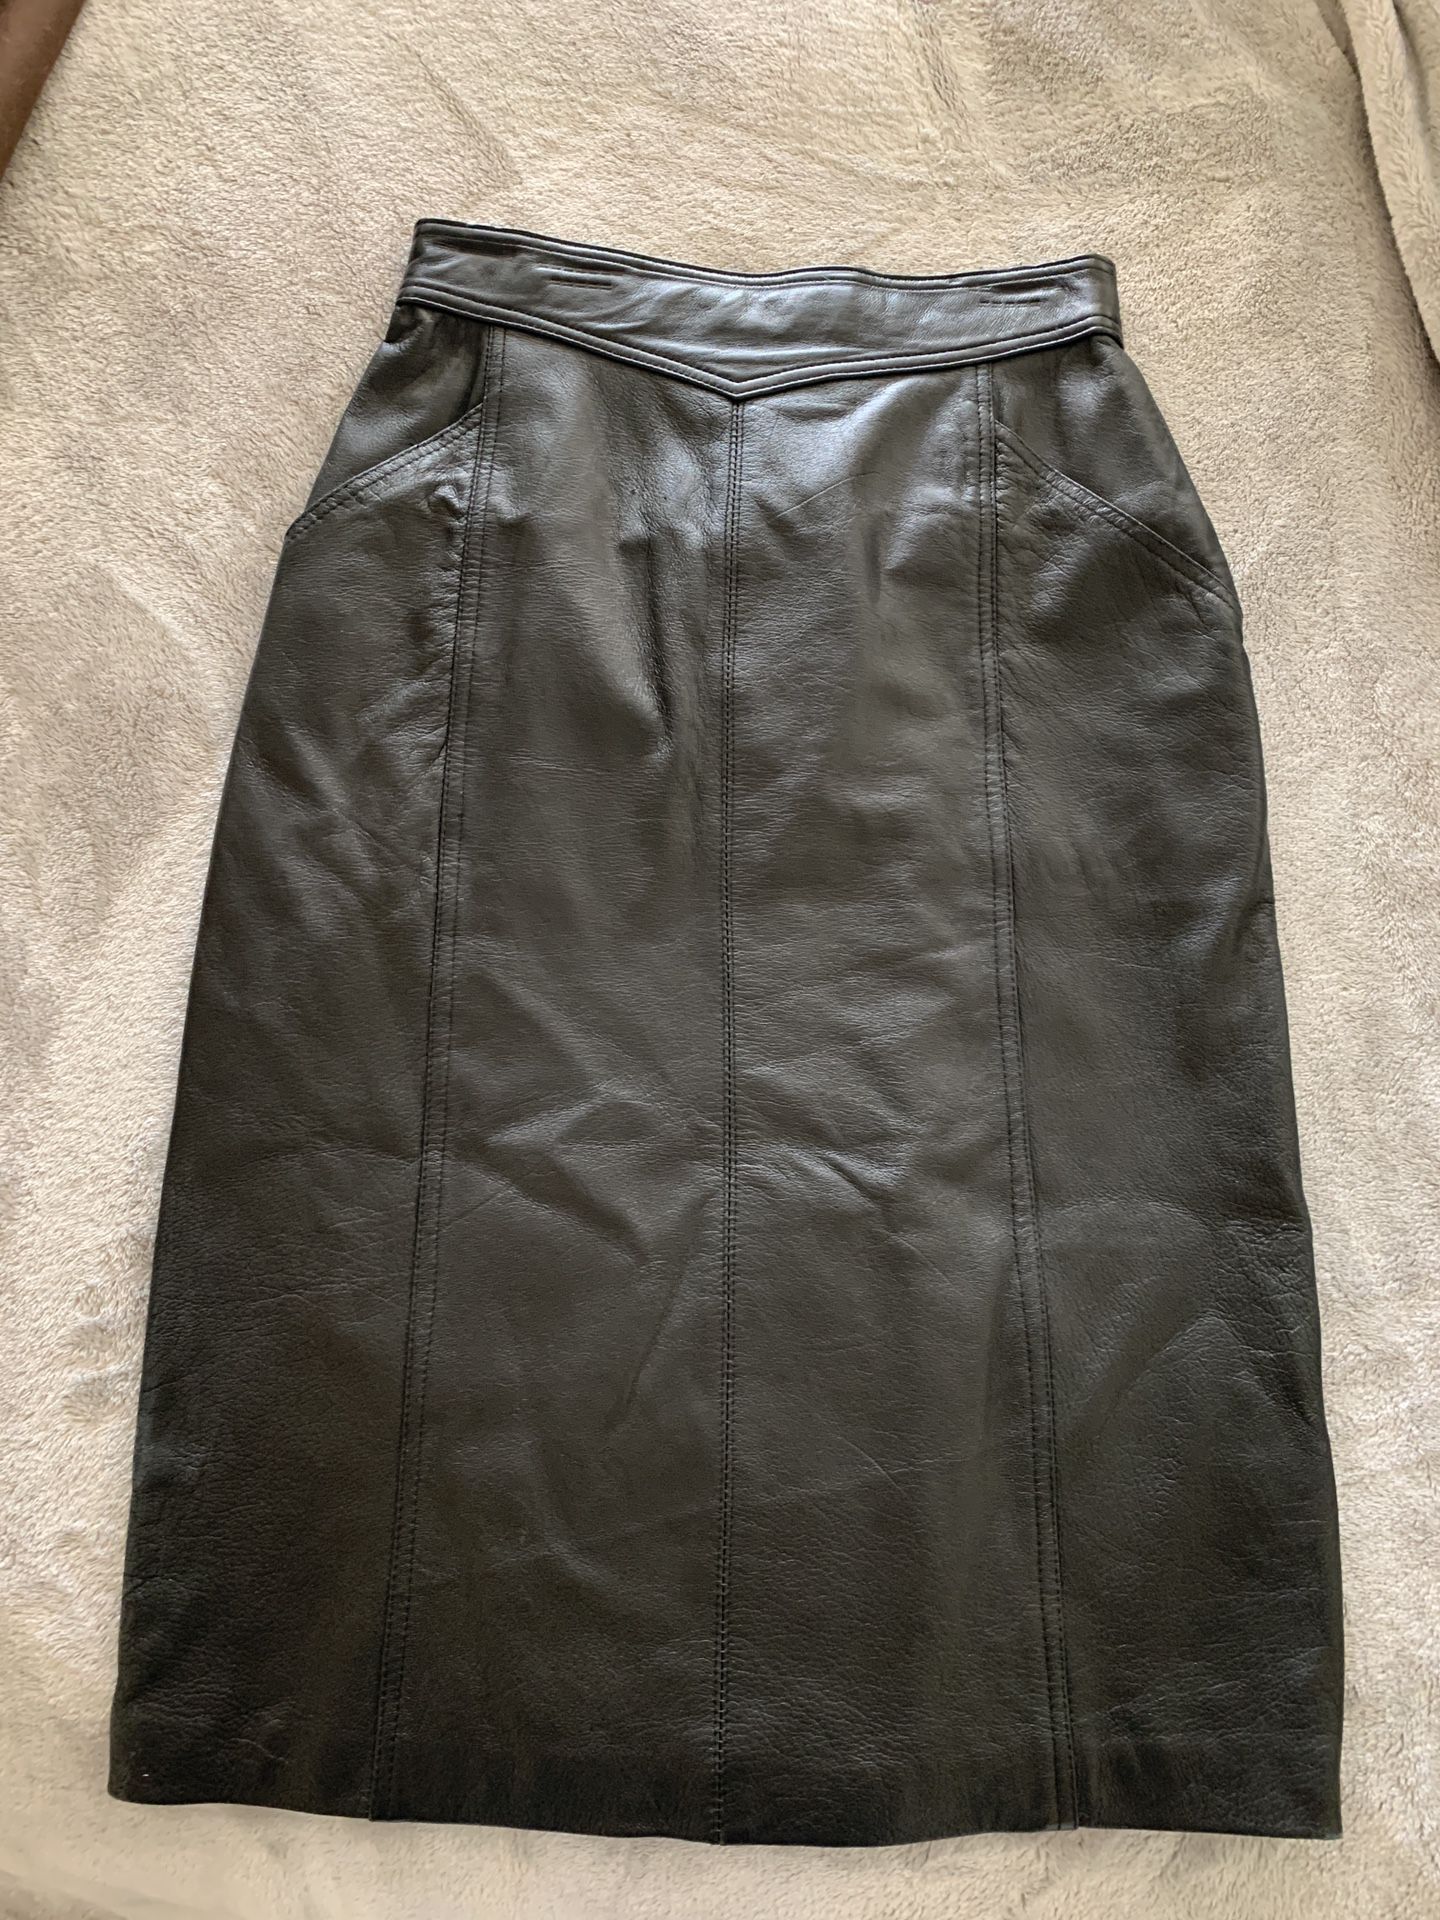 Black Leather Pencil Skirt—size 6